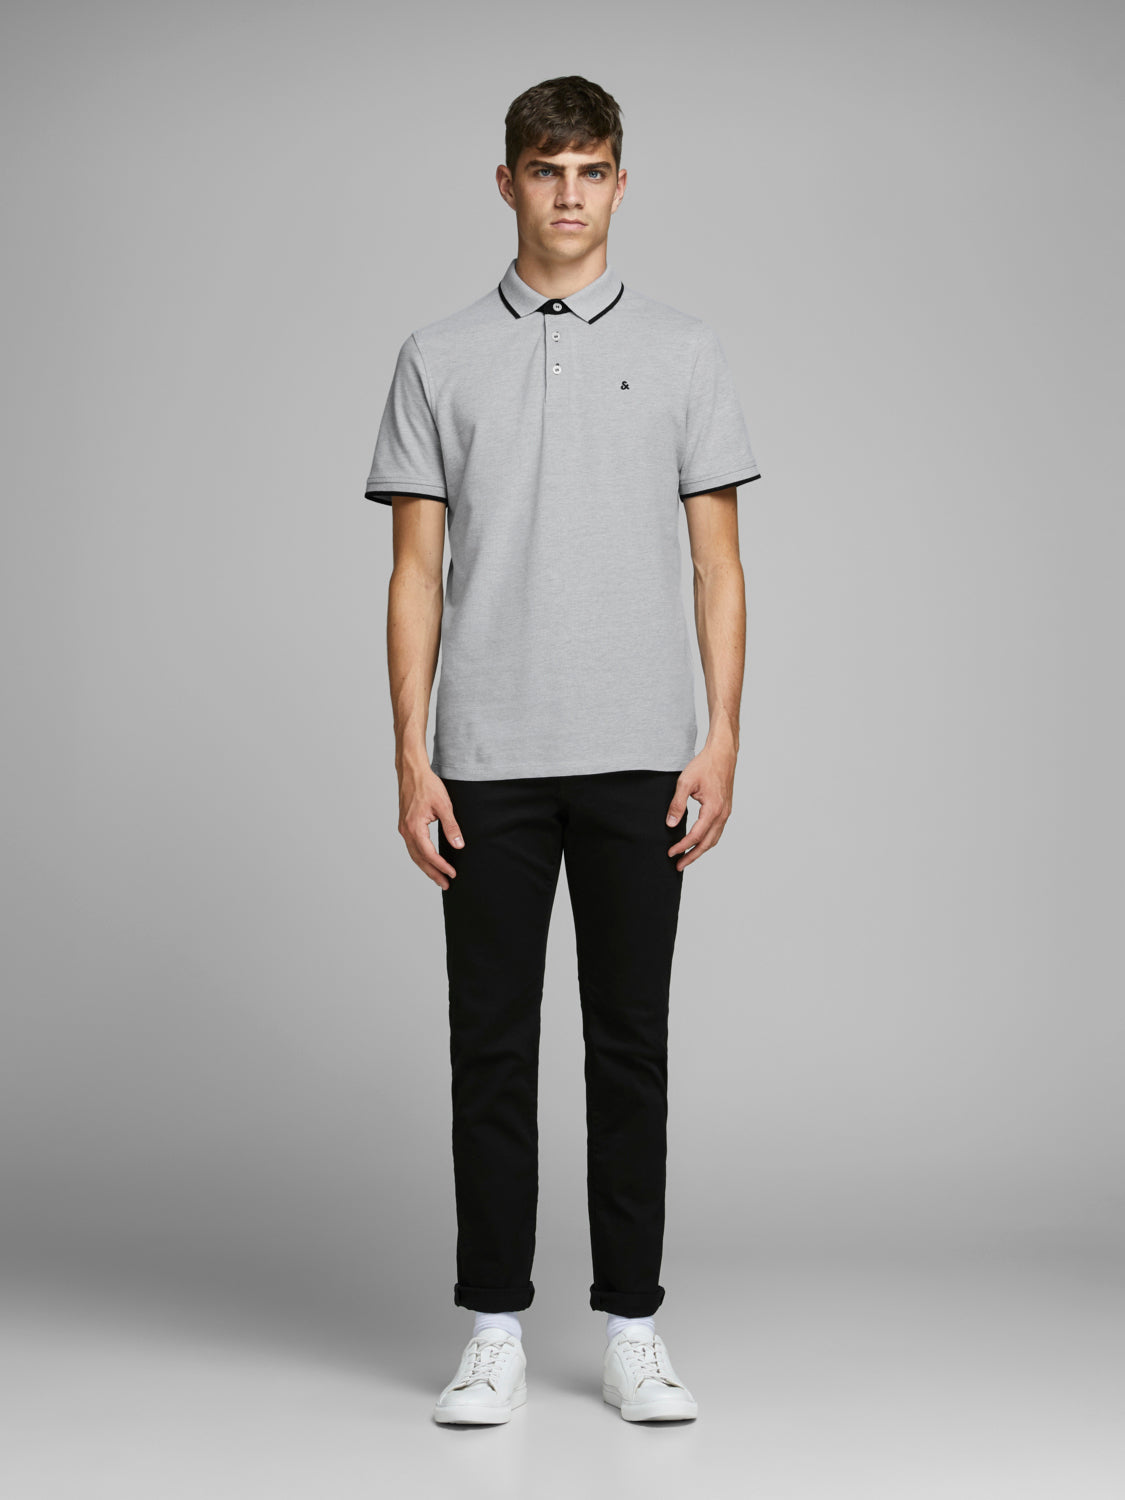 JJEPAULOS Polo Shirt - light grey melange